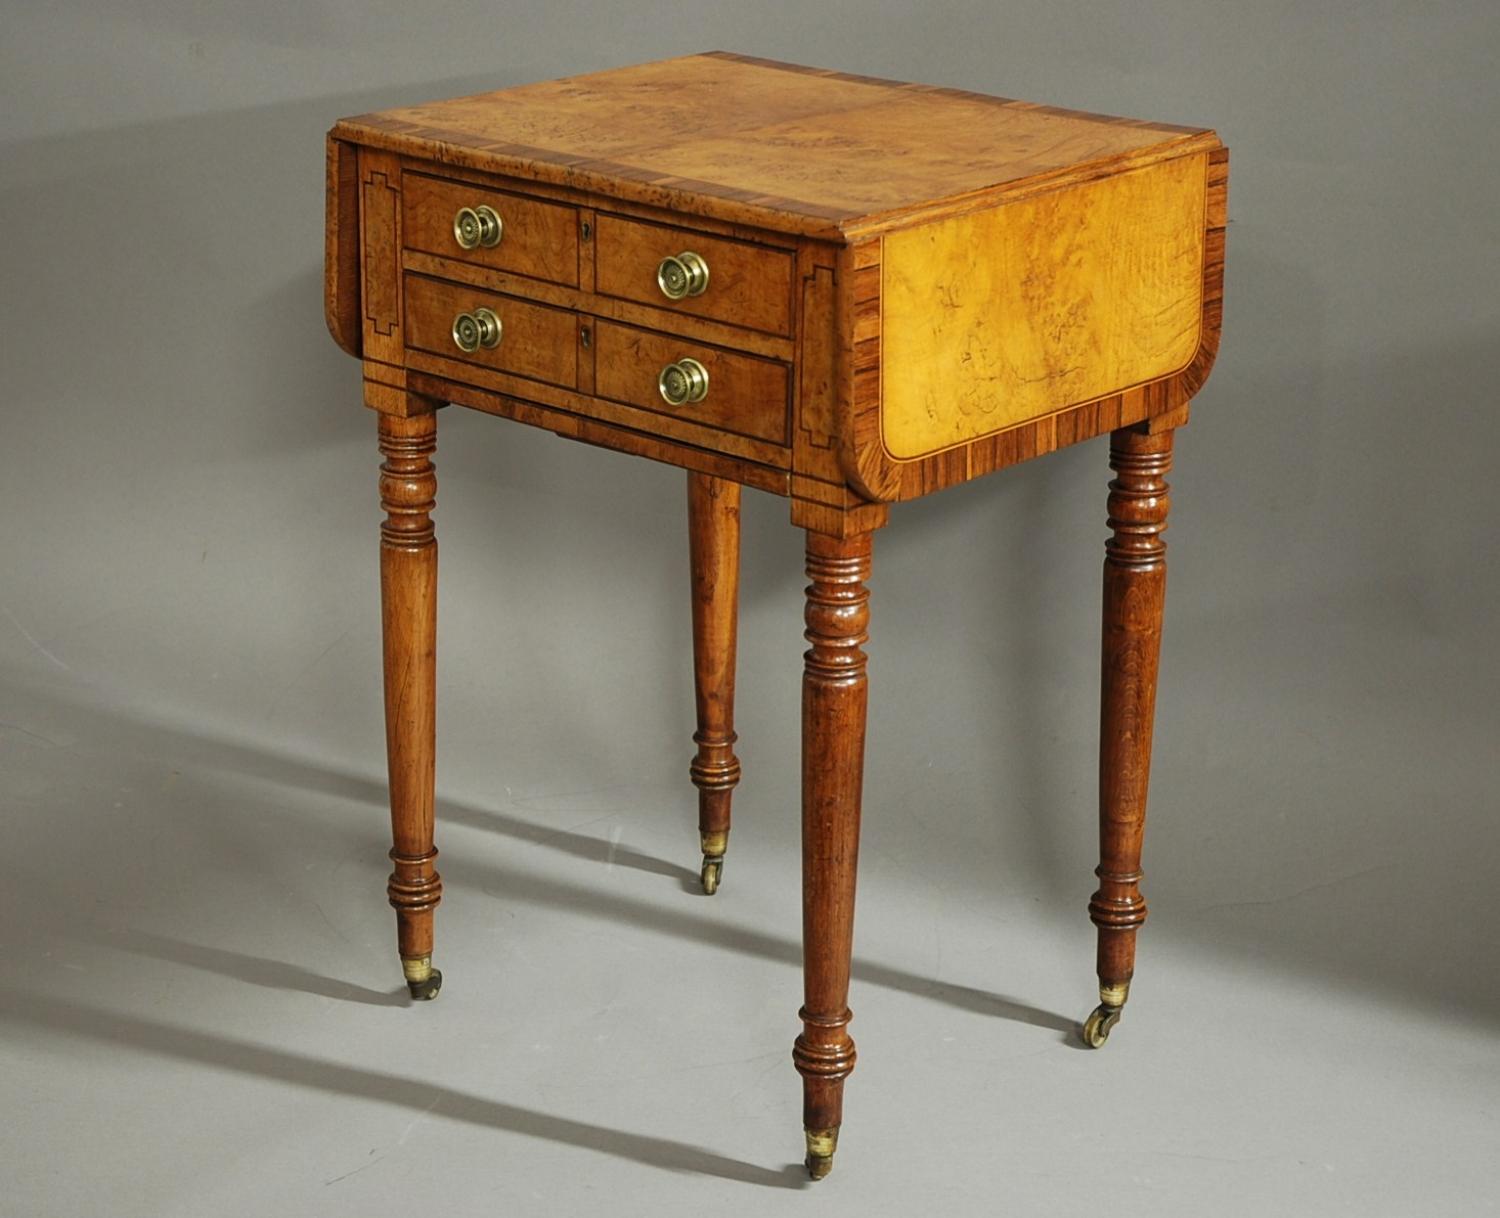 19thc burr oak work table of superb patina